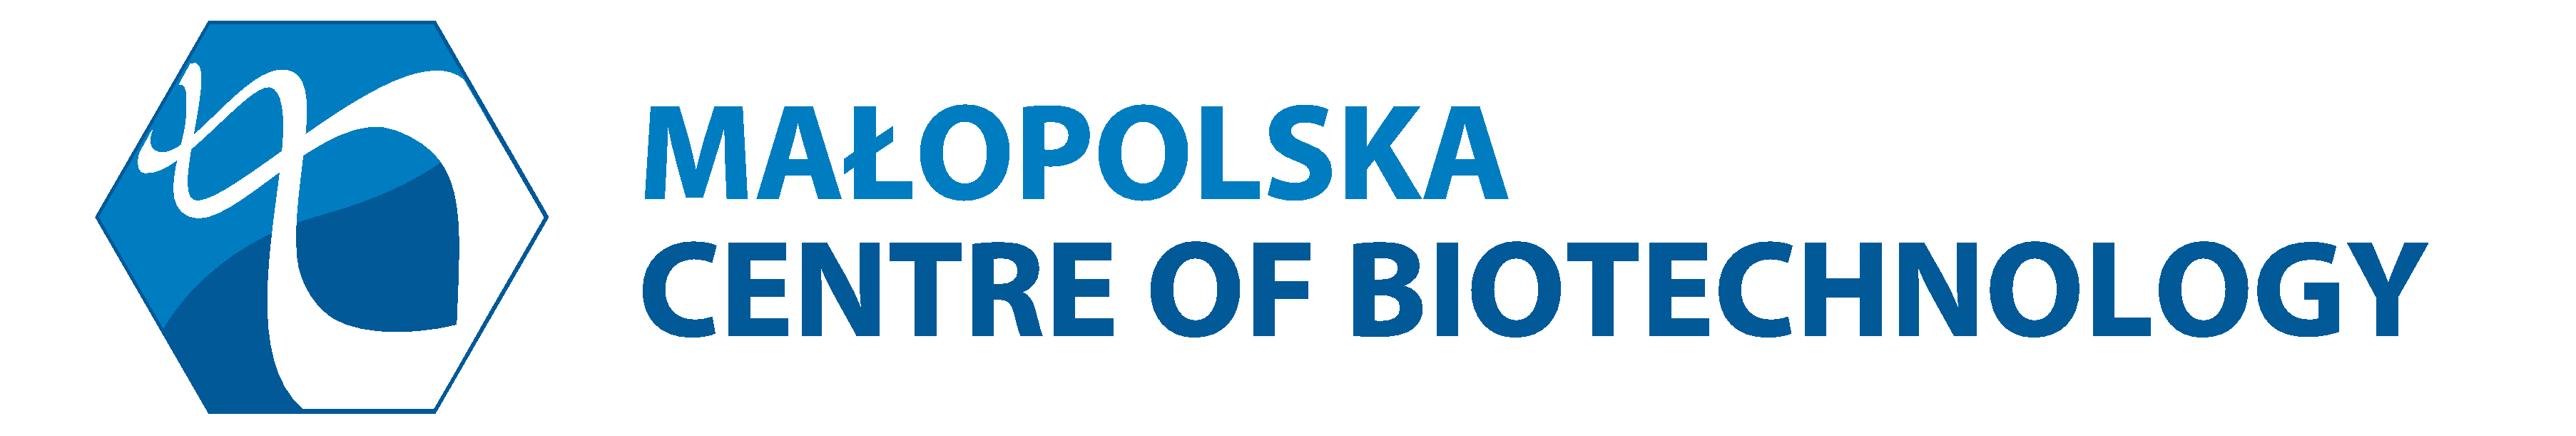 website of Małopolska Centre of Biotechnology